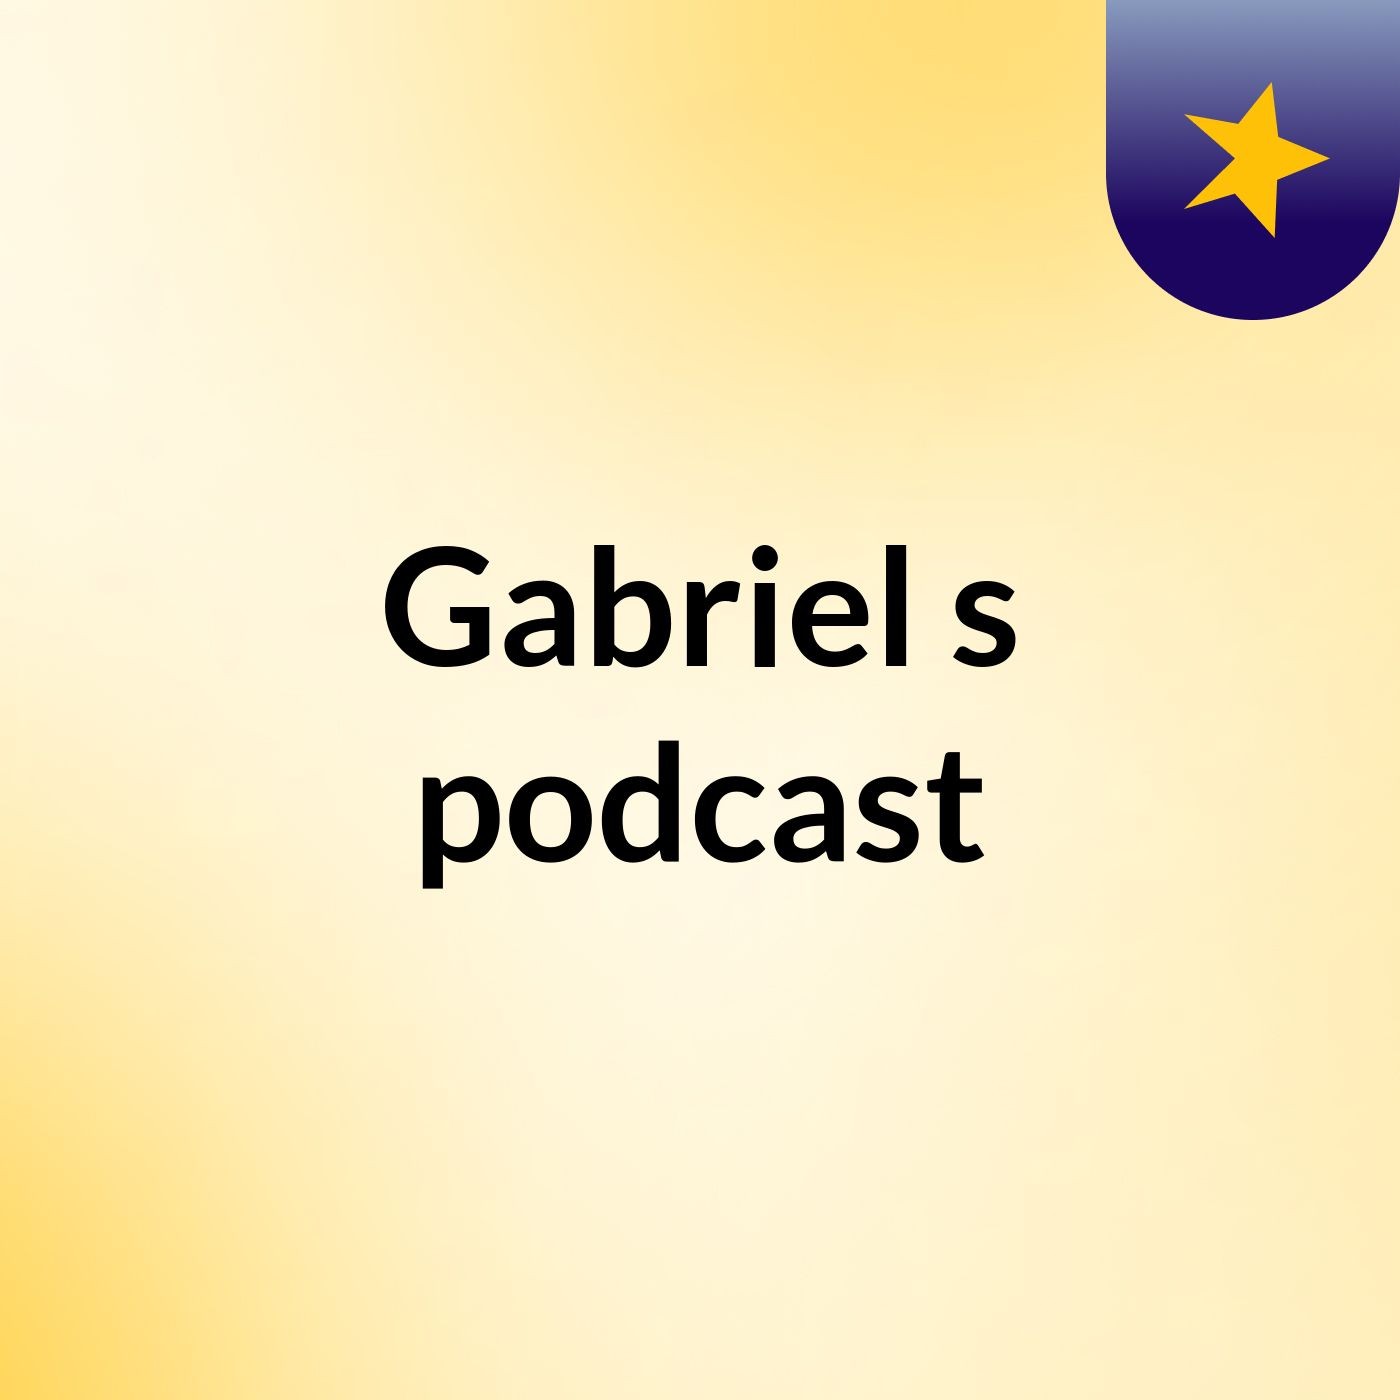 Episode 2 - Gabriel's podcast